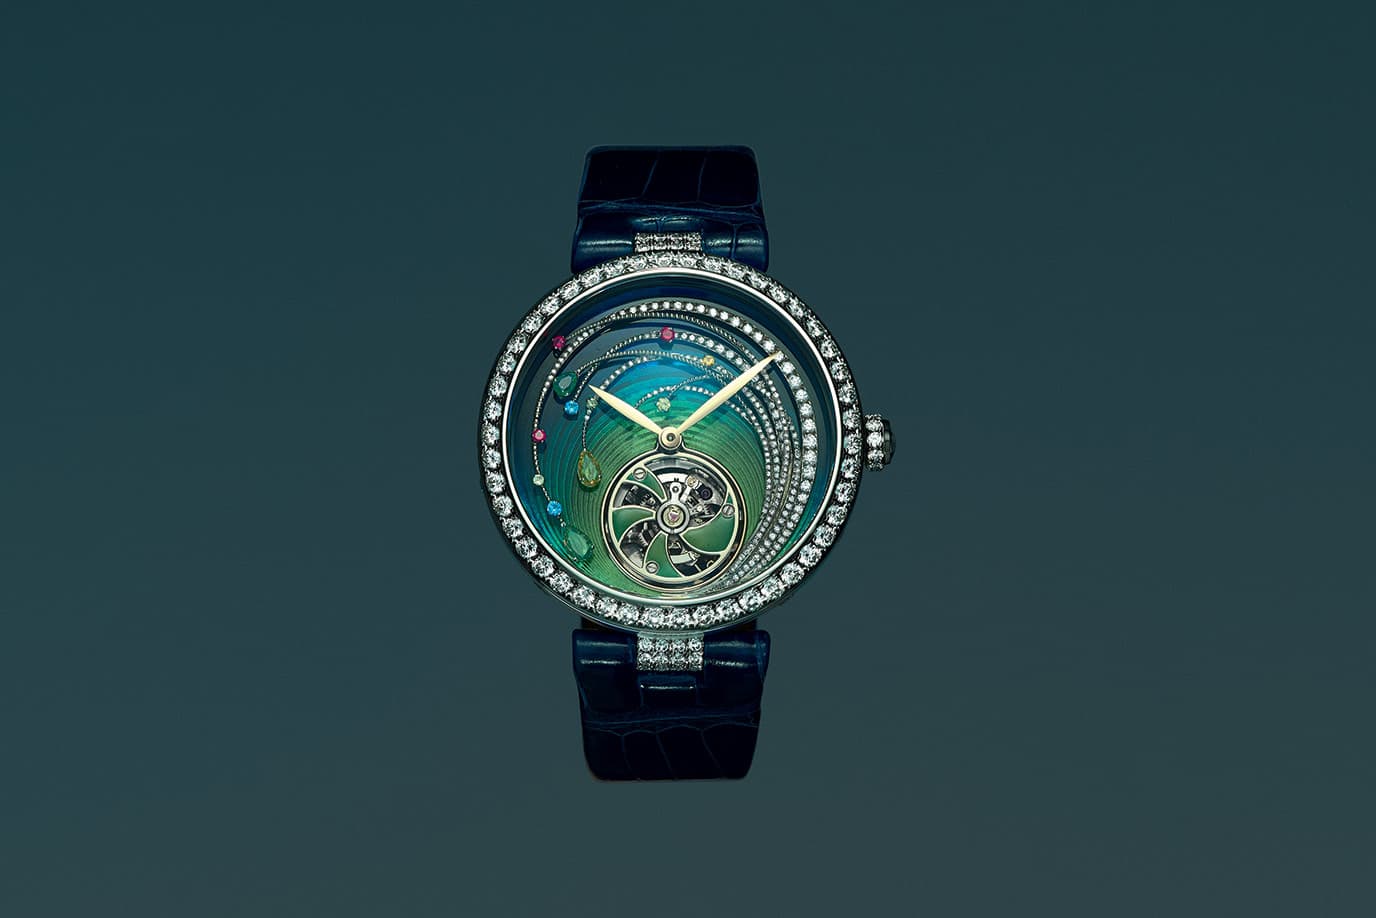 Chaumet 'Les Ciels de Chaumet' collection 'Soliel de Minuit' watch with Grand Feu enamel by Anita Porchet, diamonds, sapphires, tourmalines, spinels and garnets in white gold